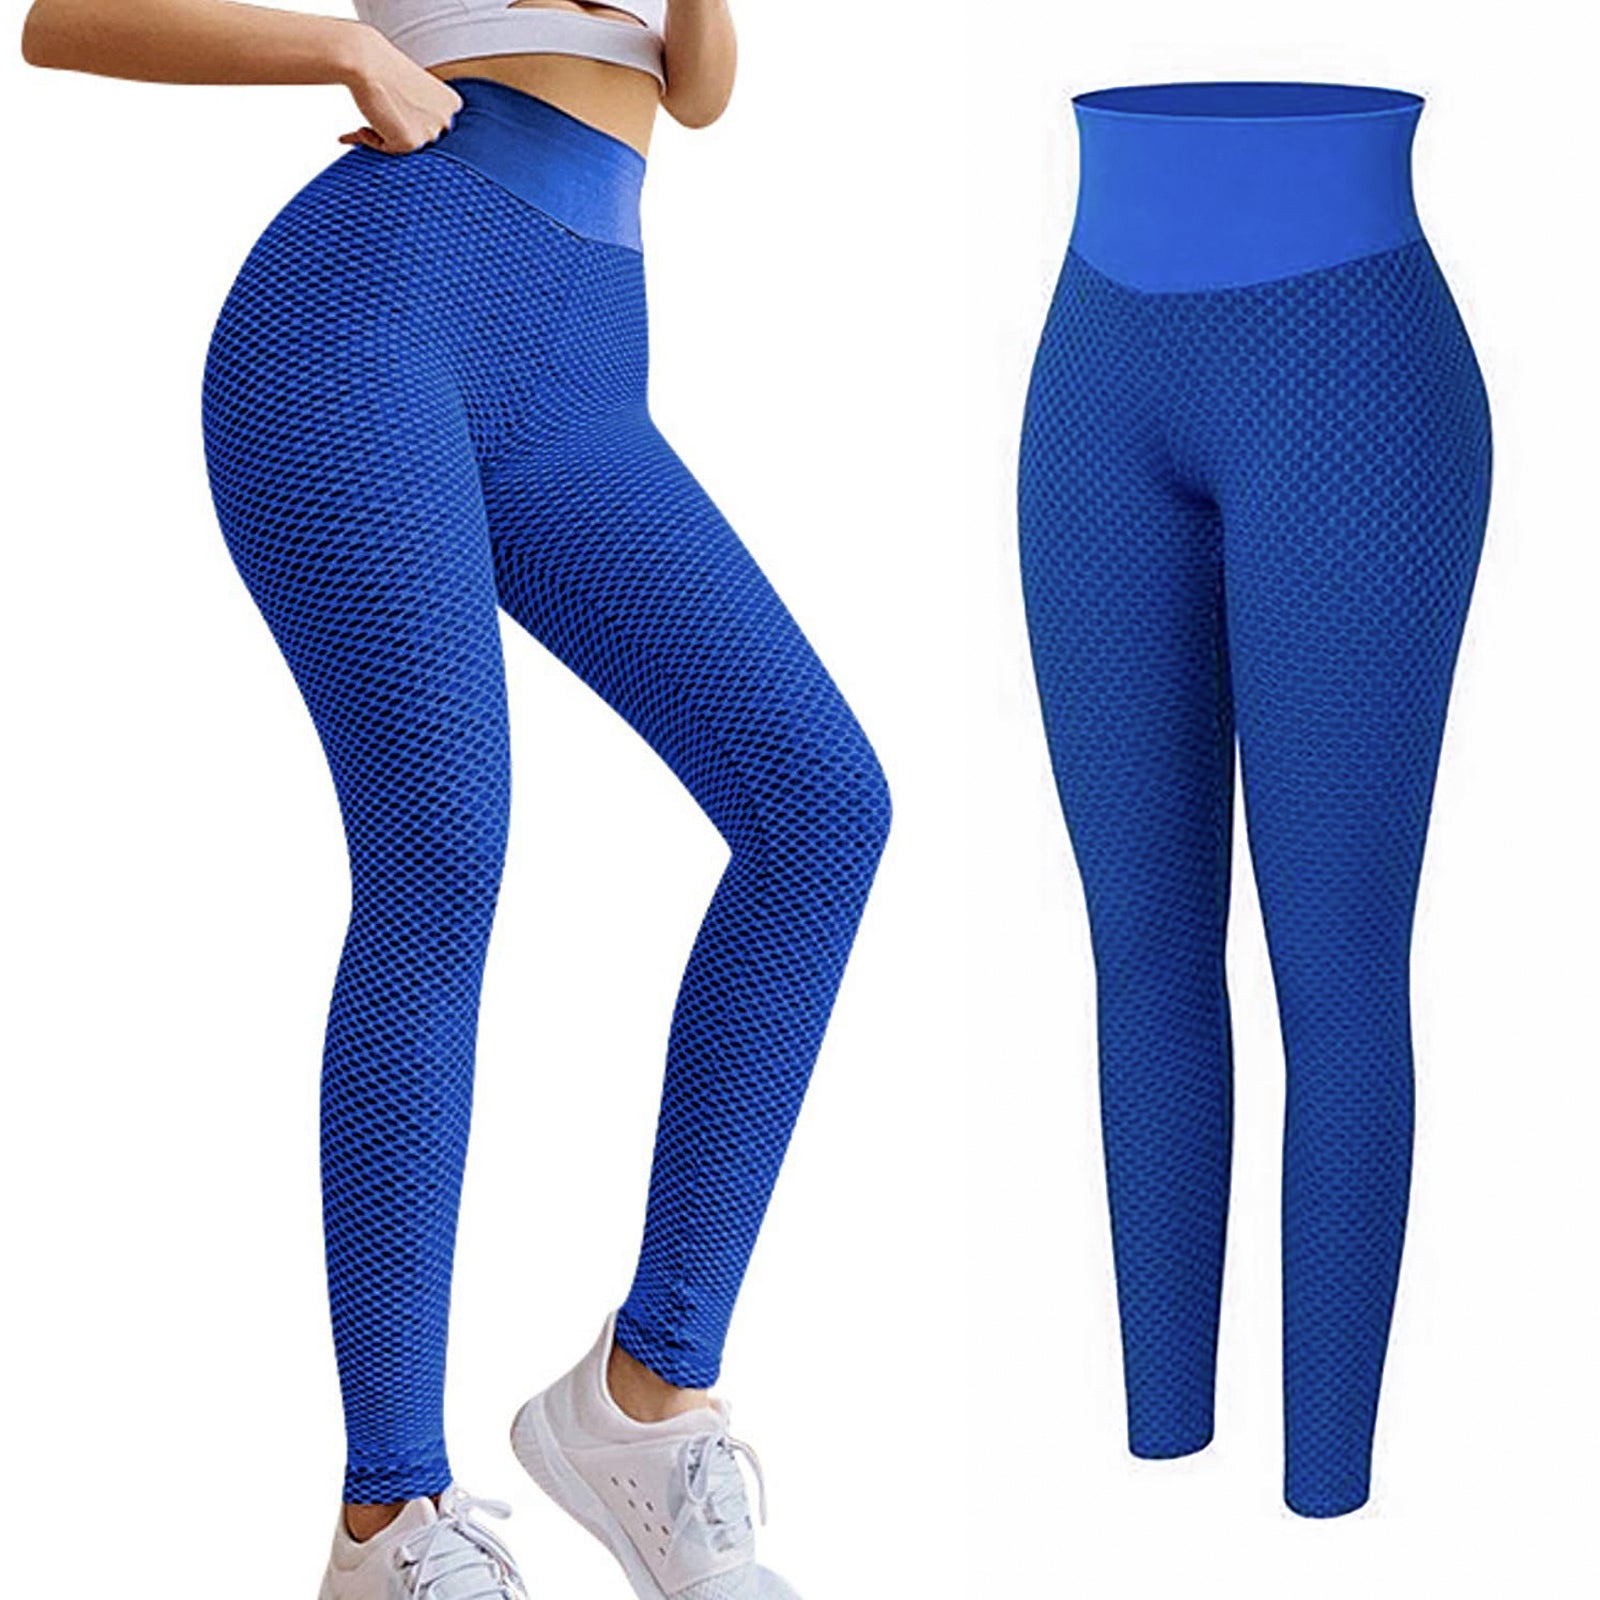  KASAAS Yoga Pants Women TIK Tok Yoga Pants Compression Leggings  Booty Lifting Plus Size Bootcut Leggings Workout Clothing Blue : Sports &  Outdoors